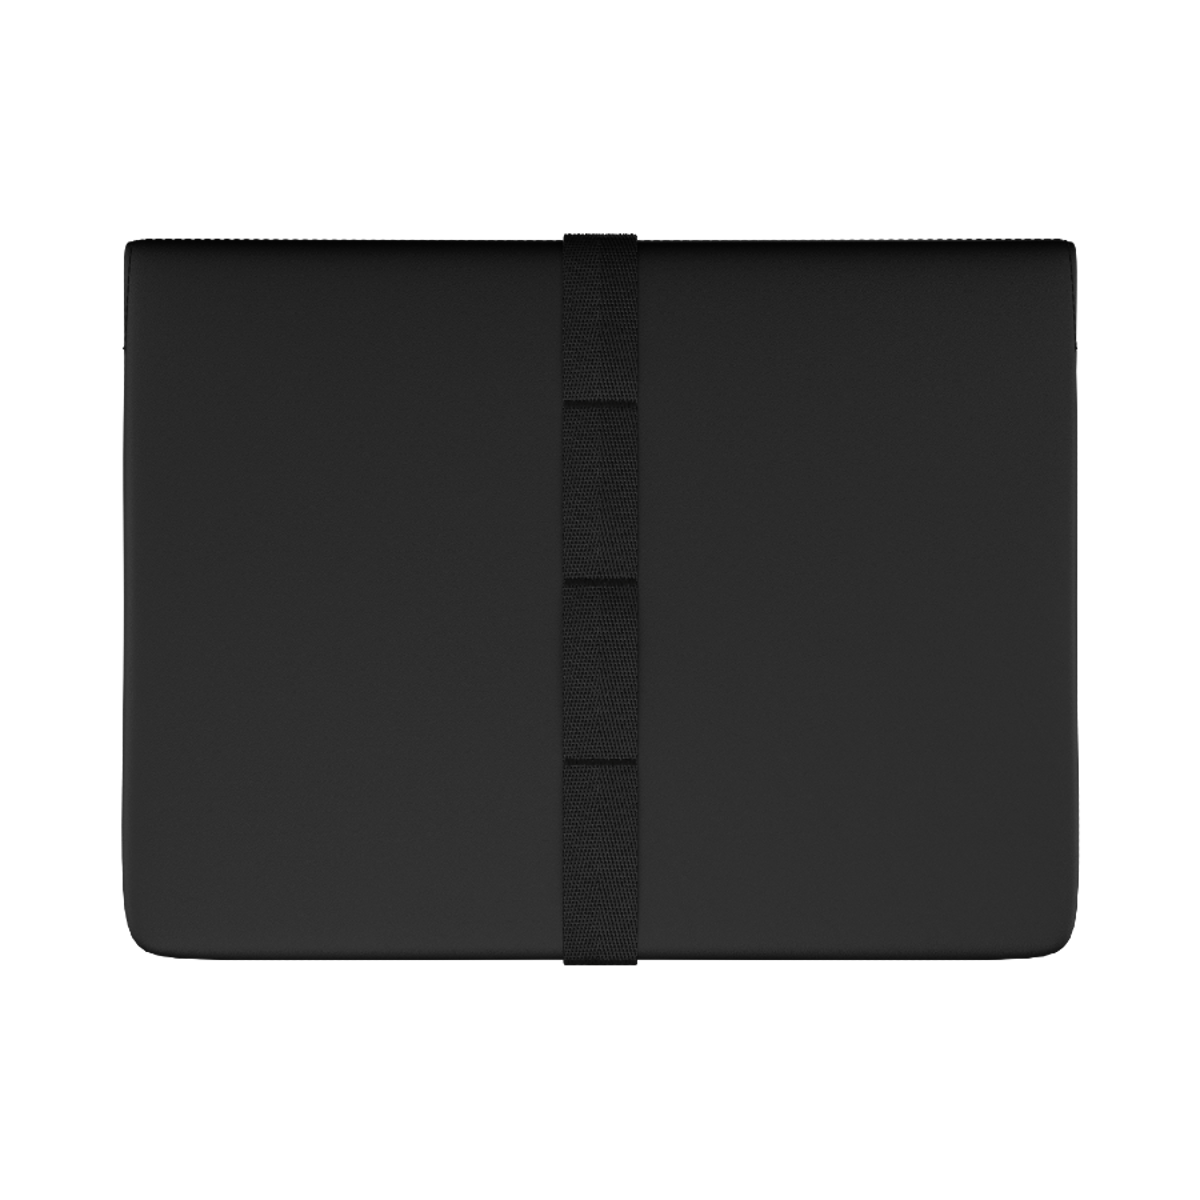 Douchebags - The Världsvan 13" Laptop Sleeve - Black Out